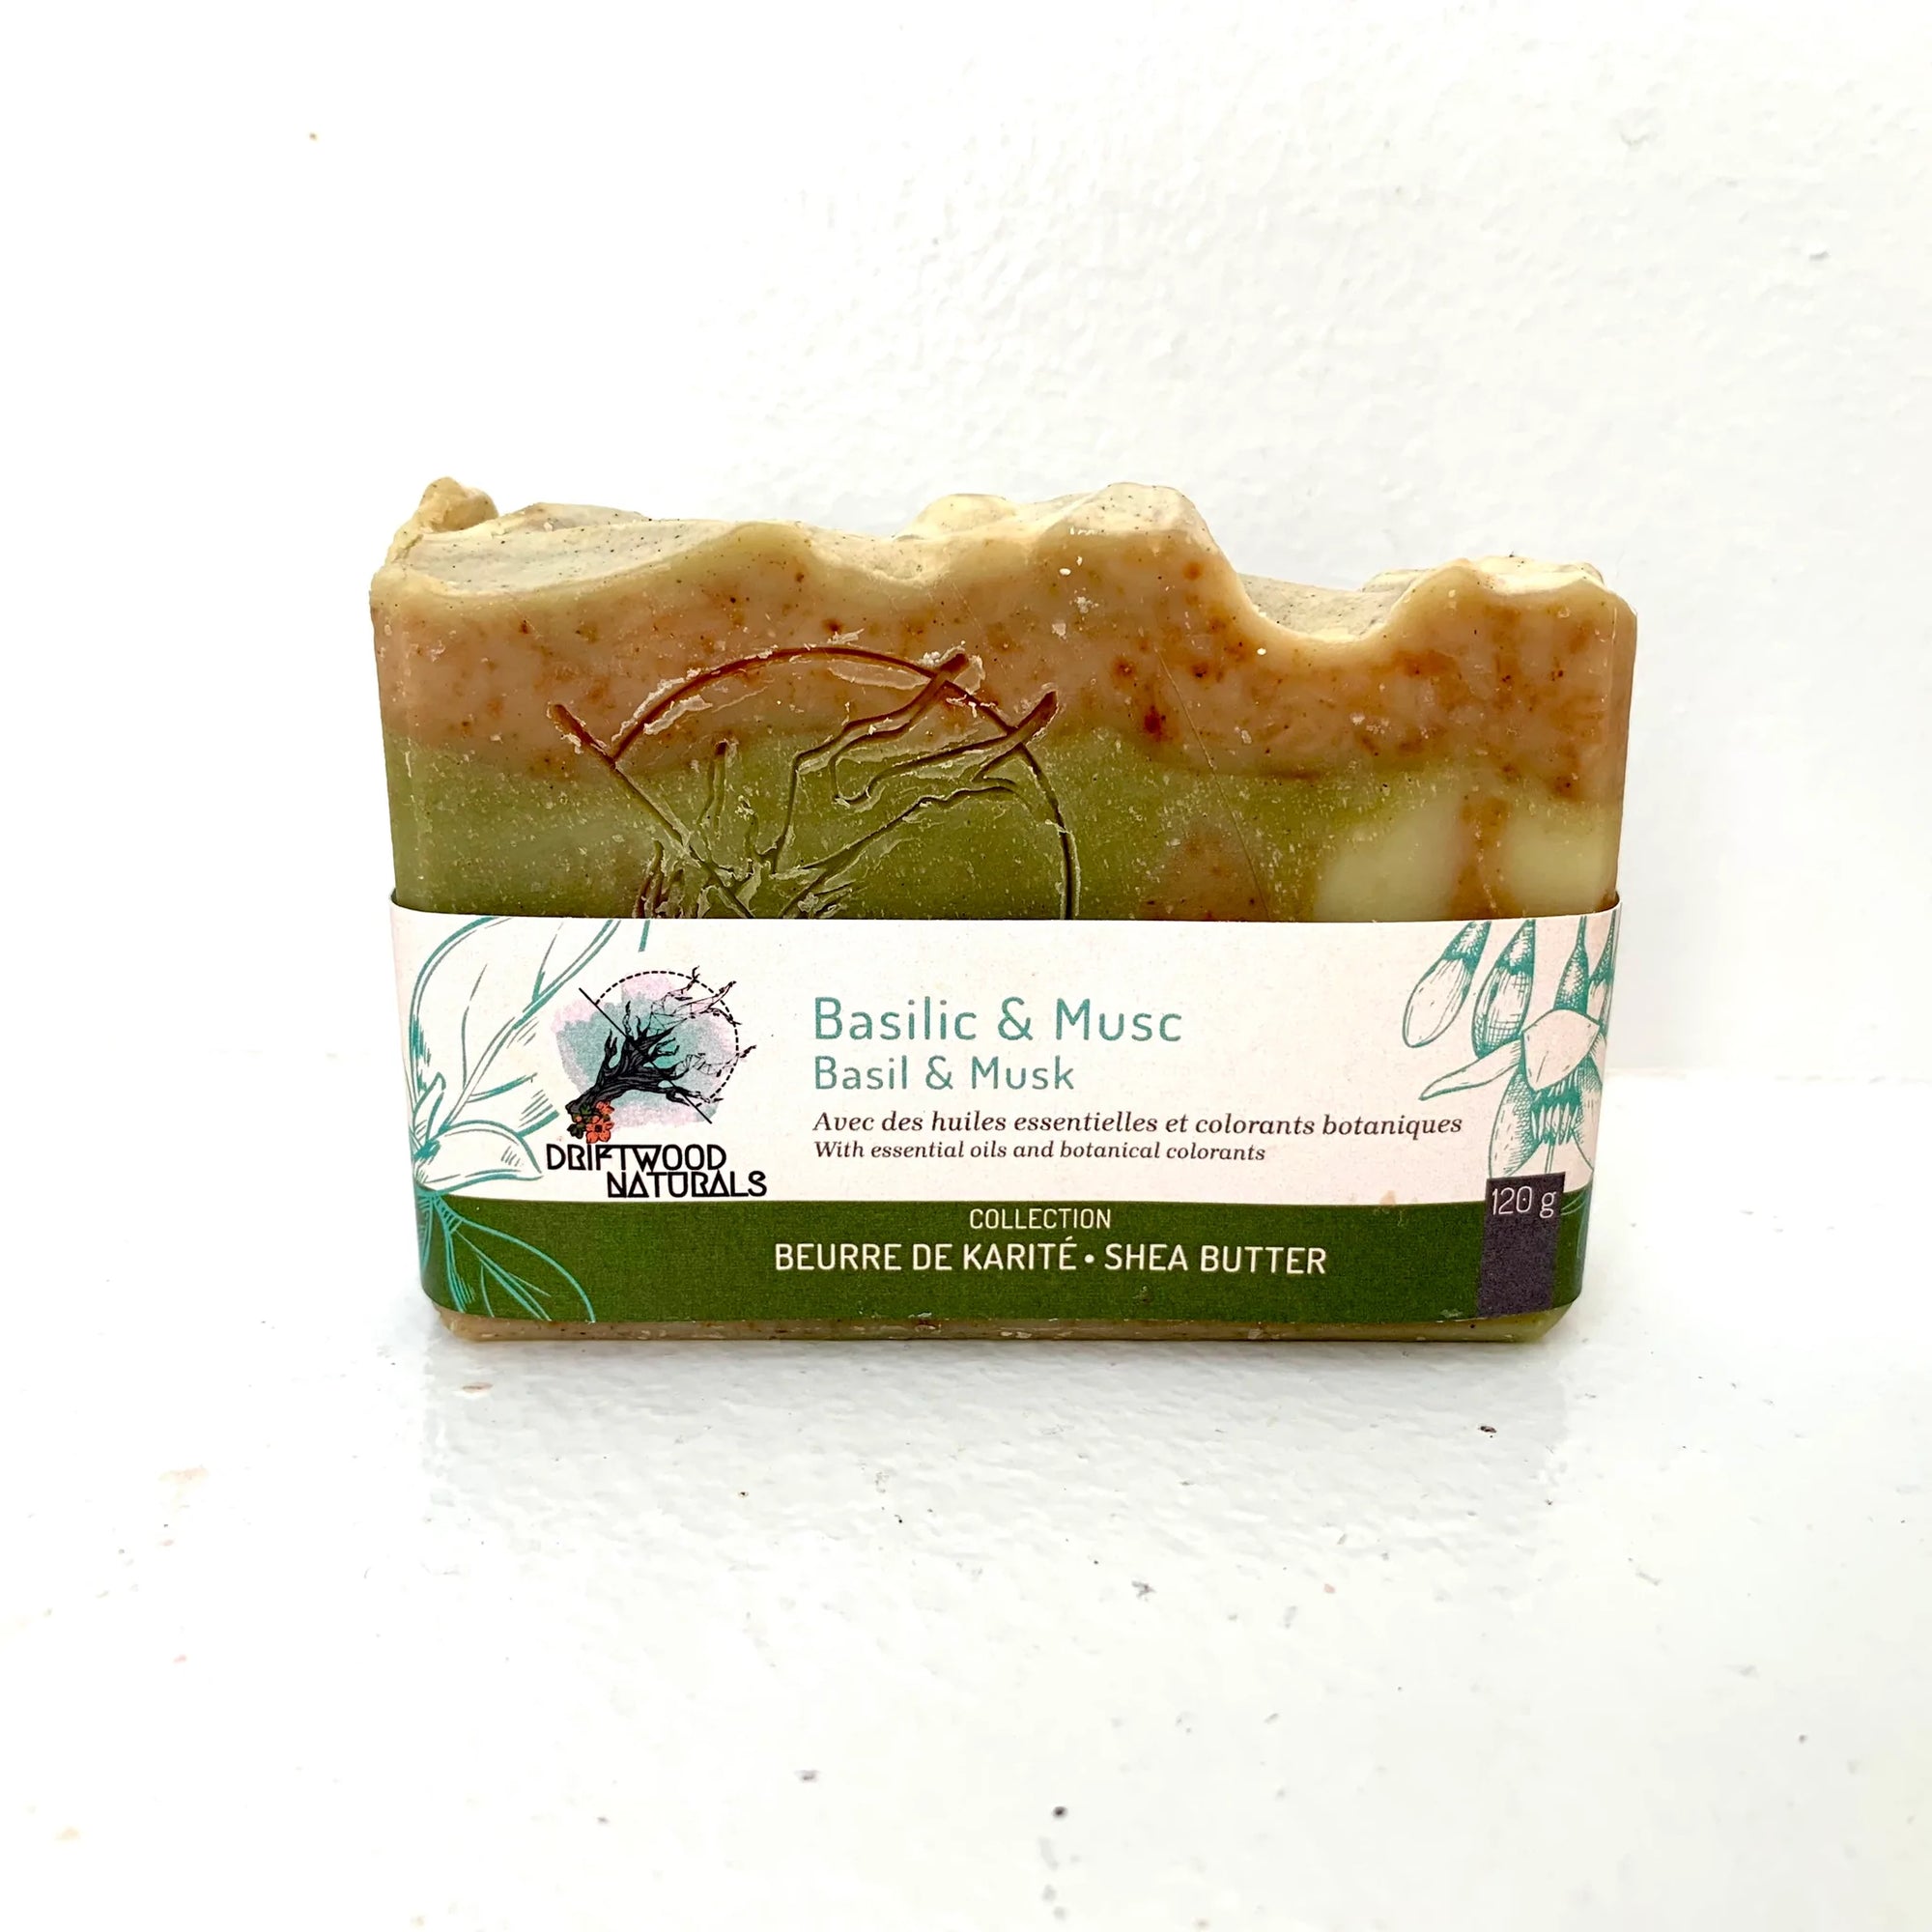 Basil & Musk Soap by Driftwood Naturals, 120g